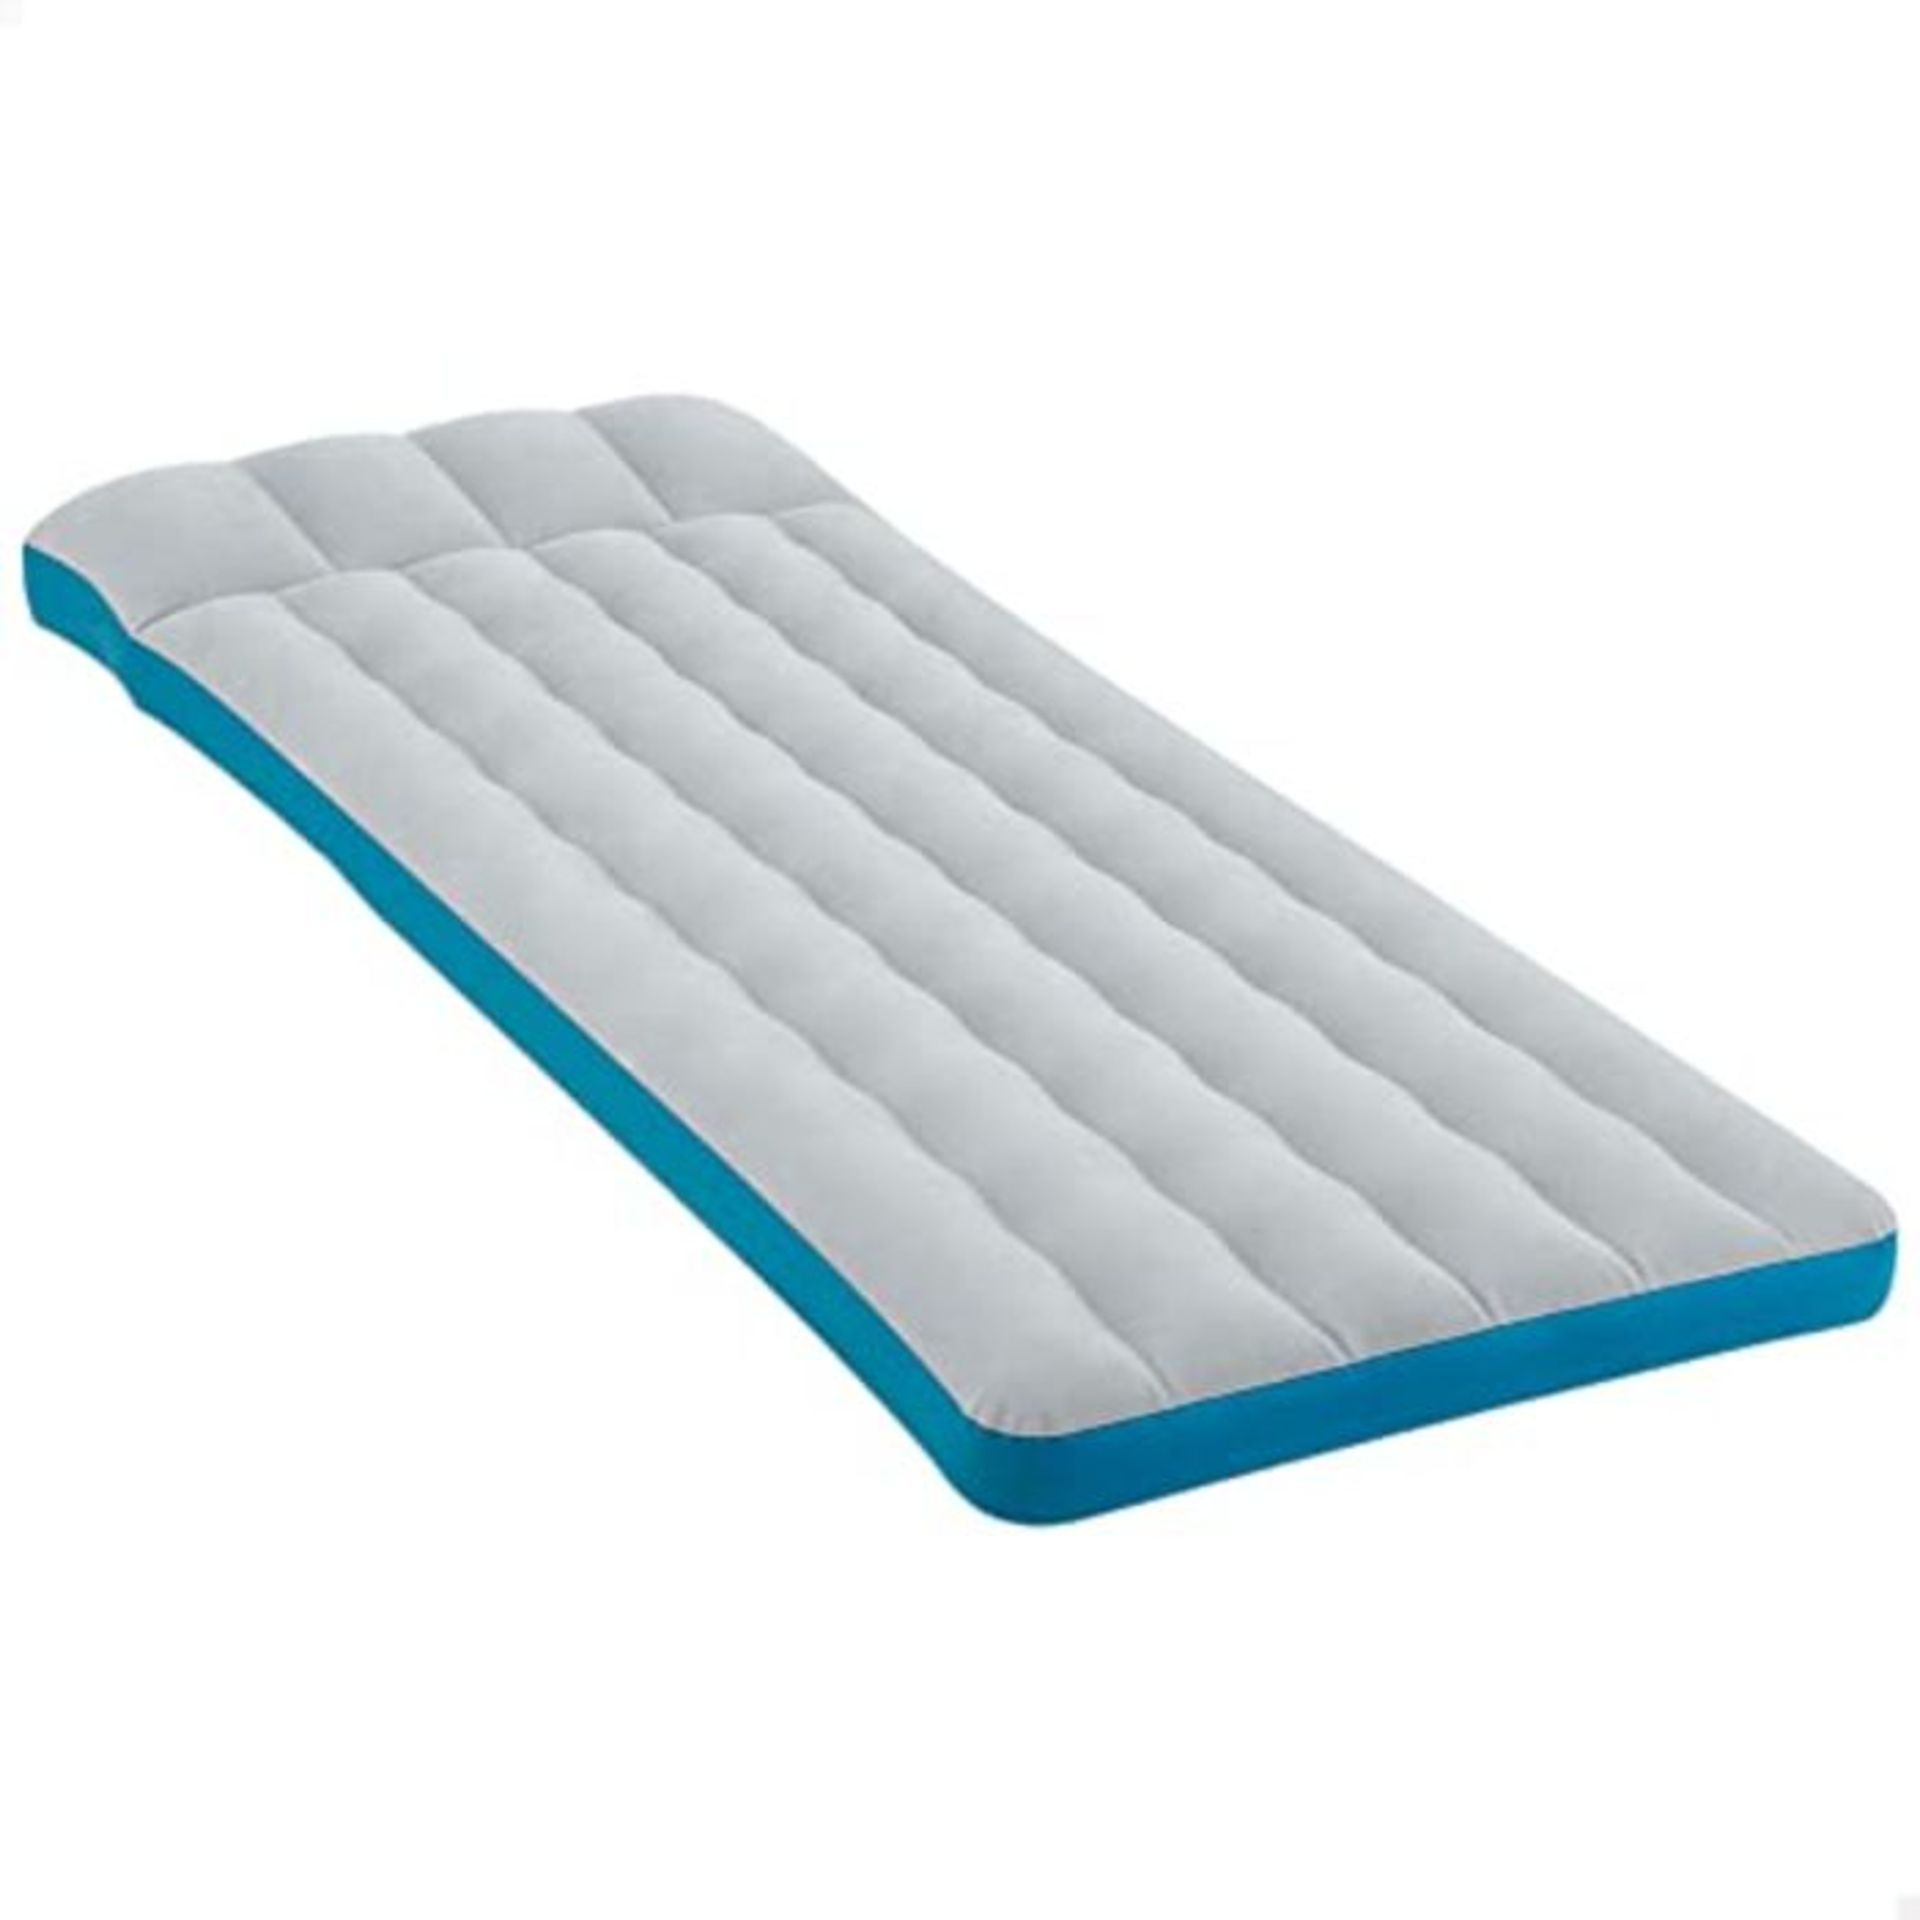 Intex 72.5" x 26.5" x 6.75" Fabric Camping Air Bed